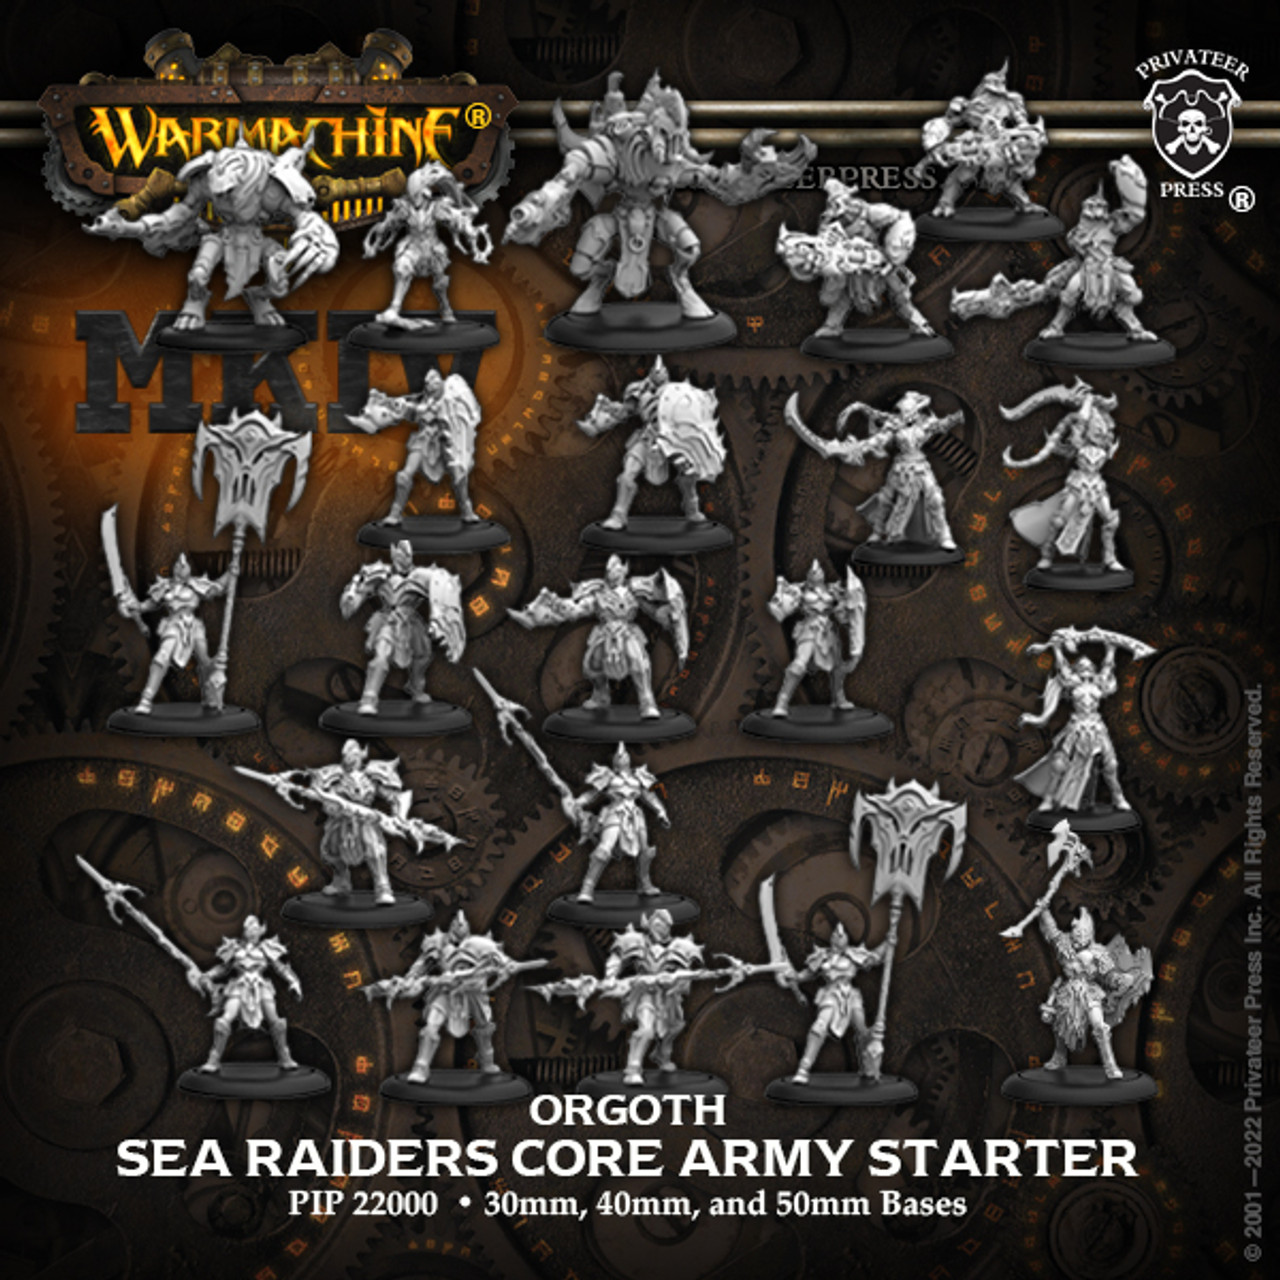 Orgoth Sea Raiders Core Army Starter - Miniatures - Warmachine